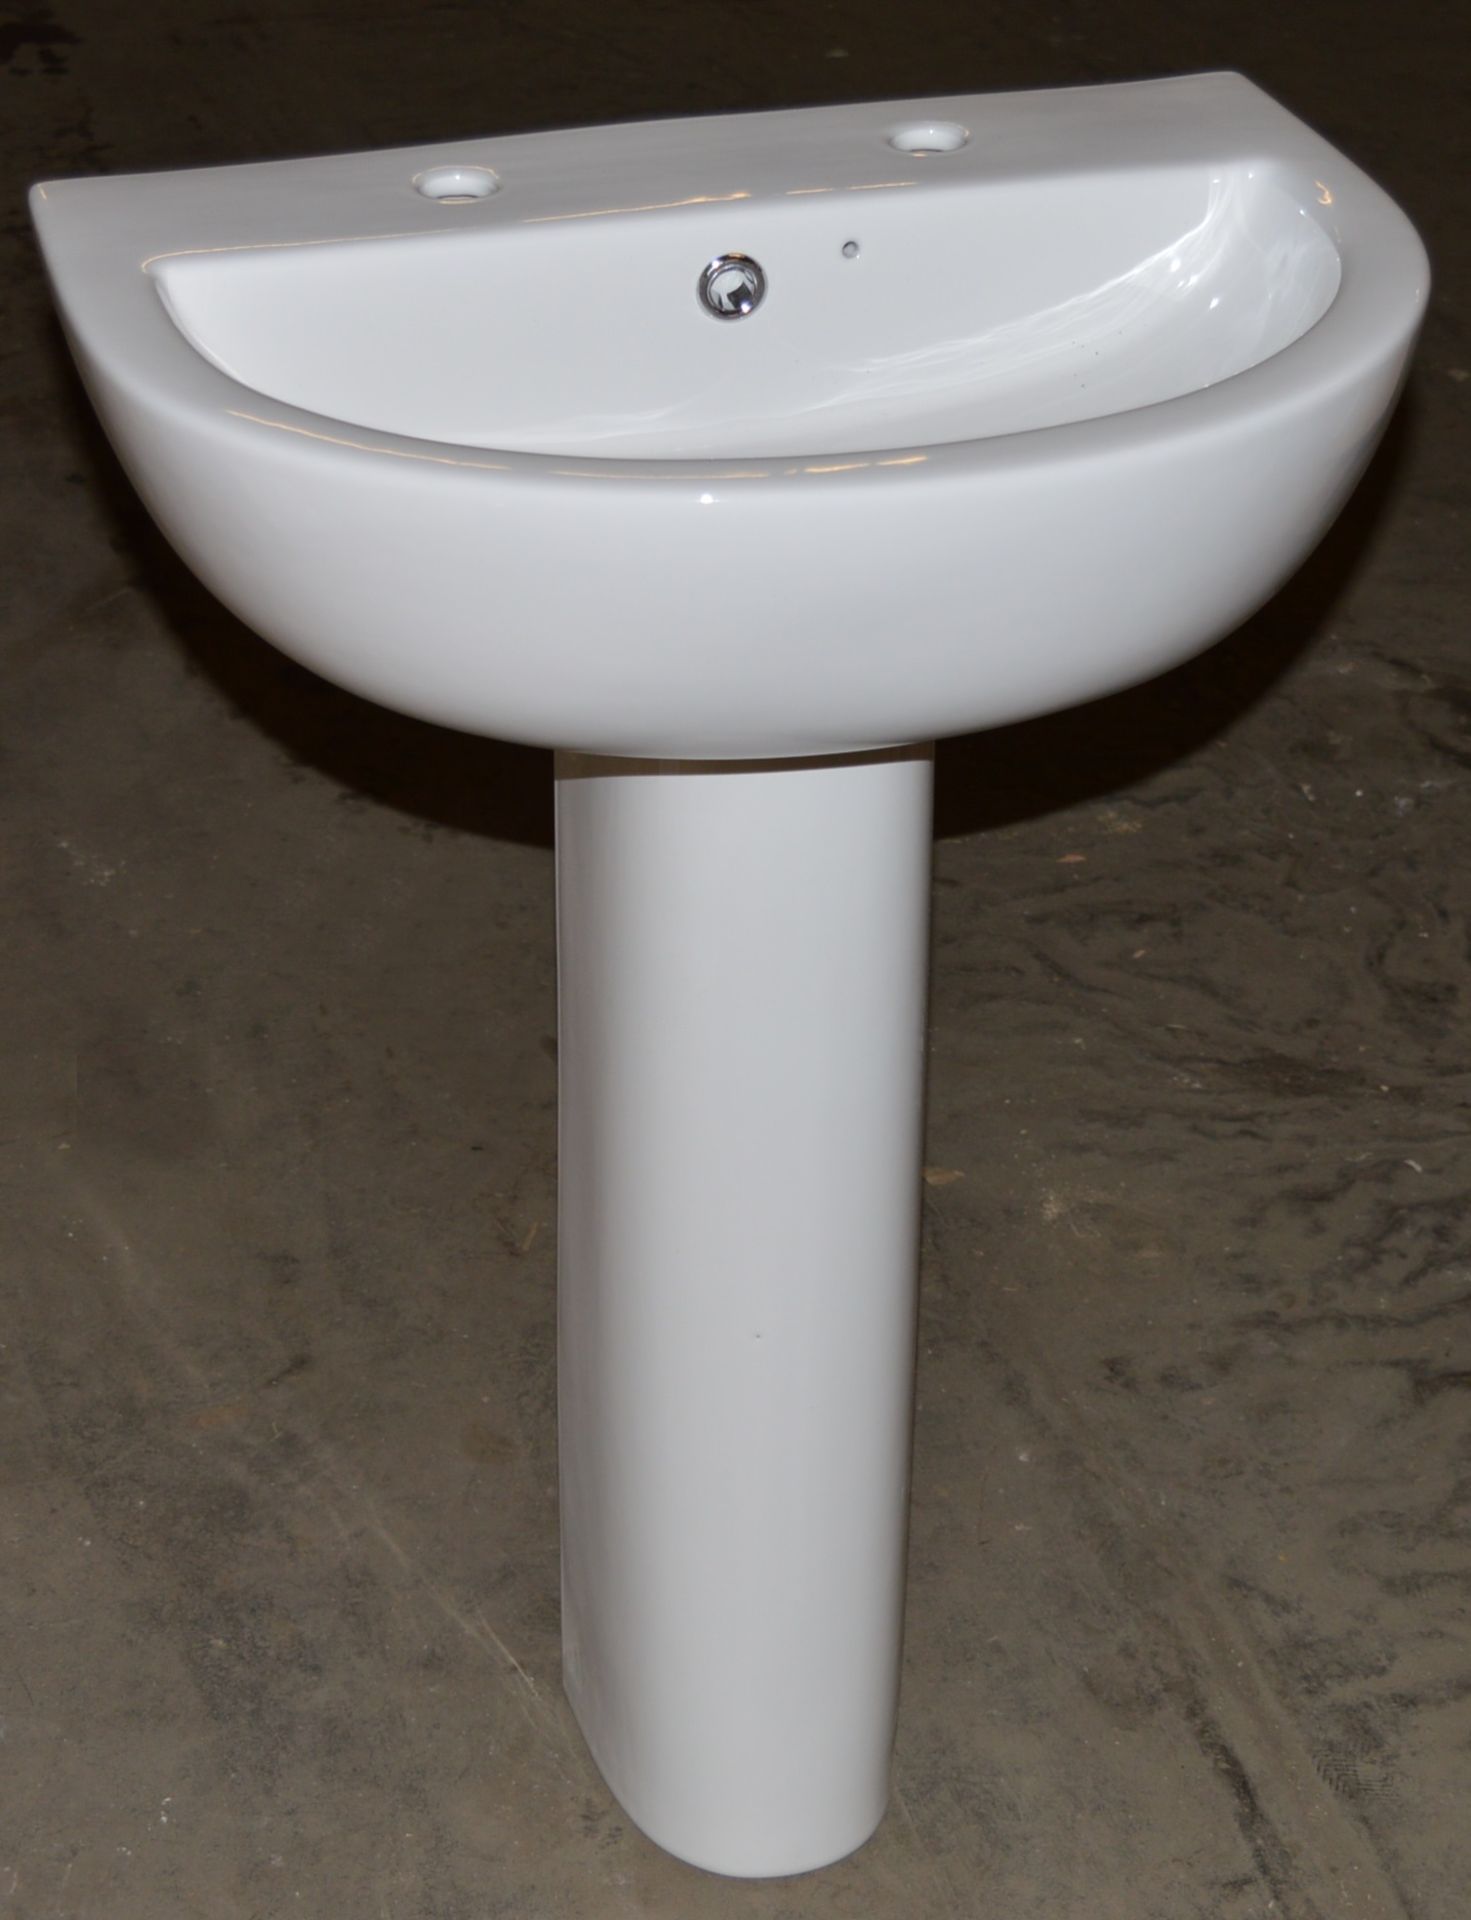 1 x Elena 550mm Sink Basin With Pedestal - Unused Stock - CL190 - Ref BOLT010 - Location: Bolton